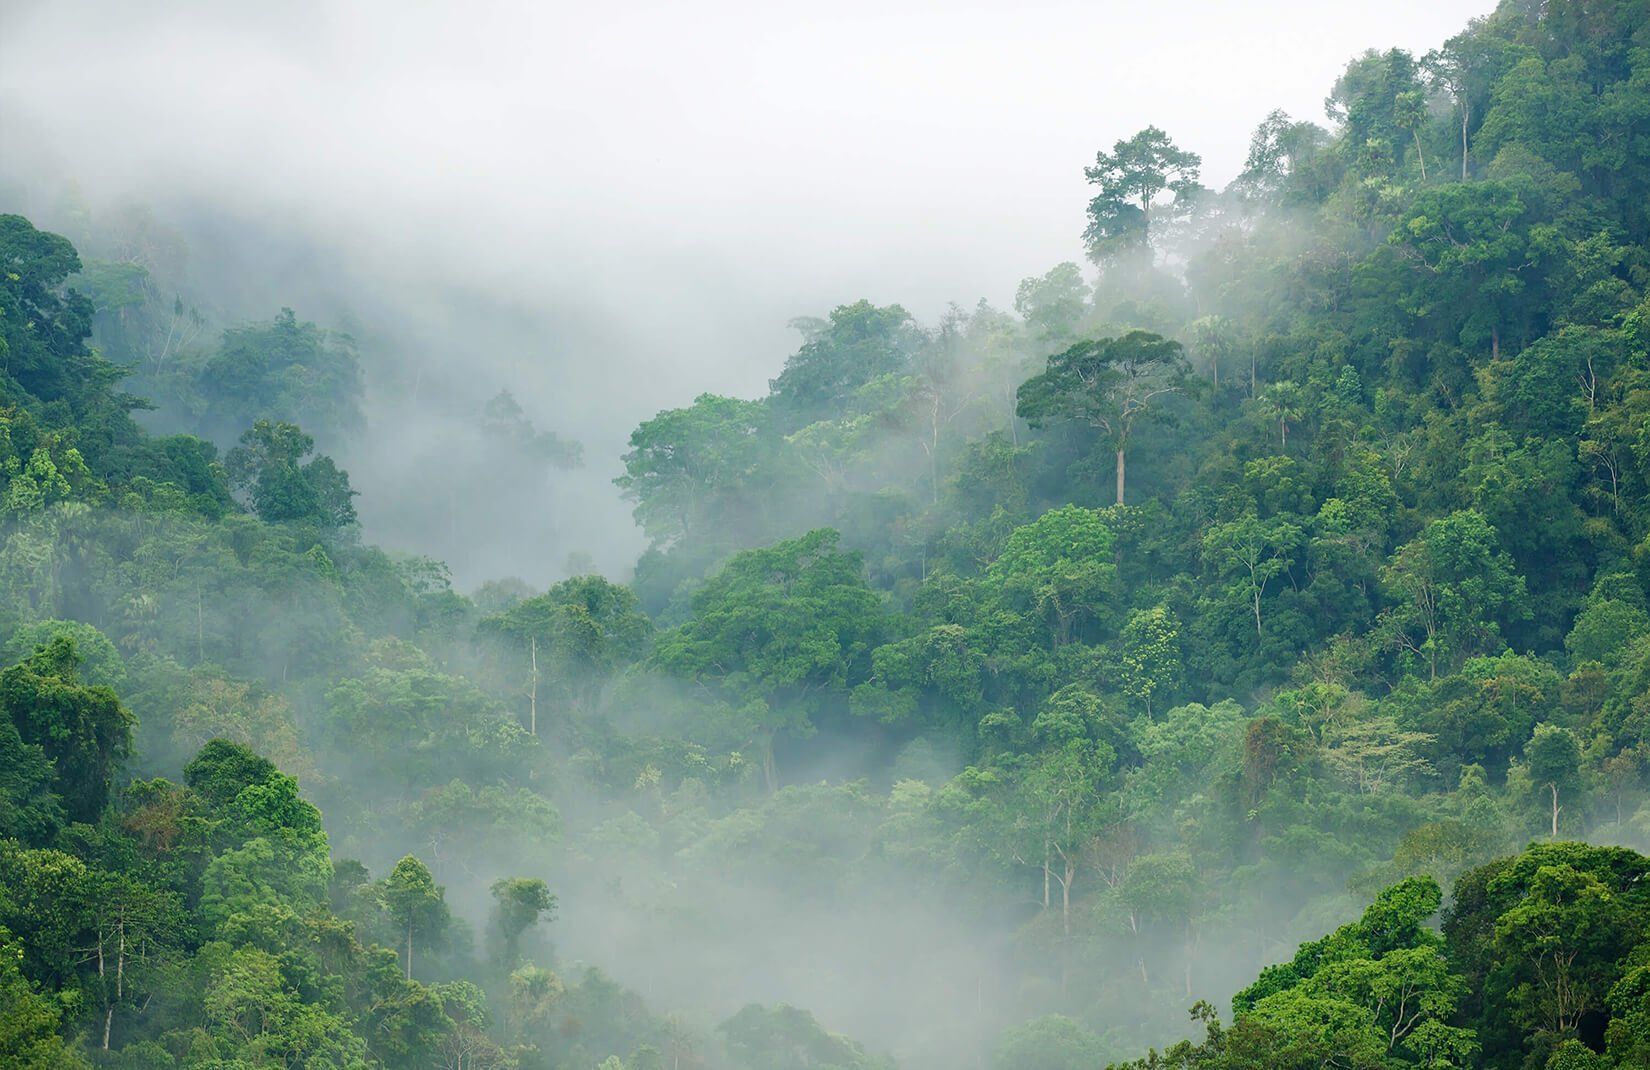 A dense forest shrouded in mist - Jungle, fog